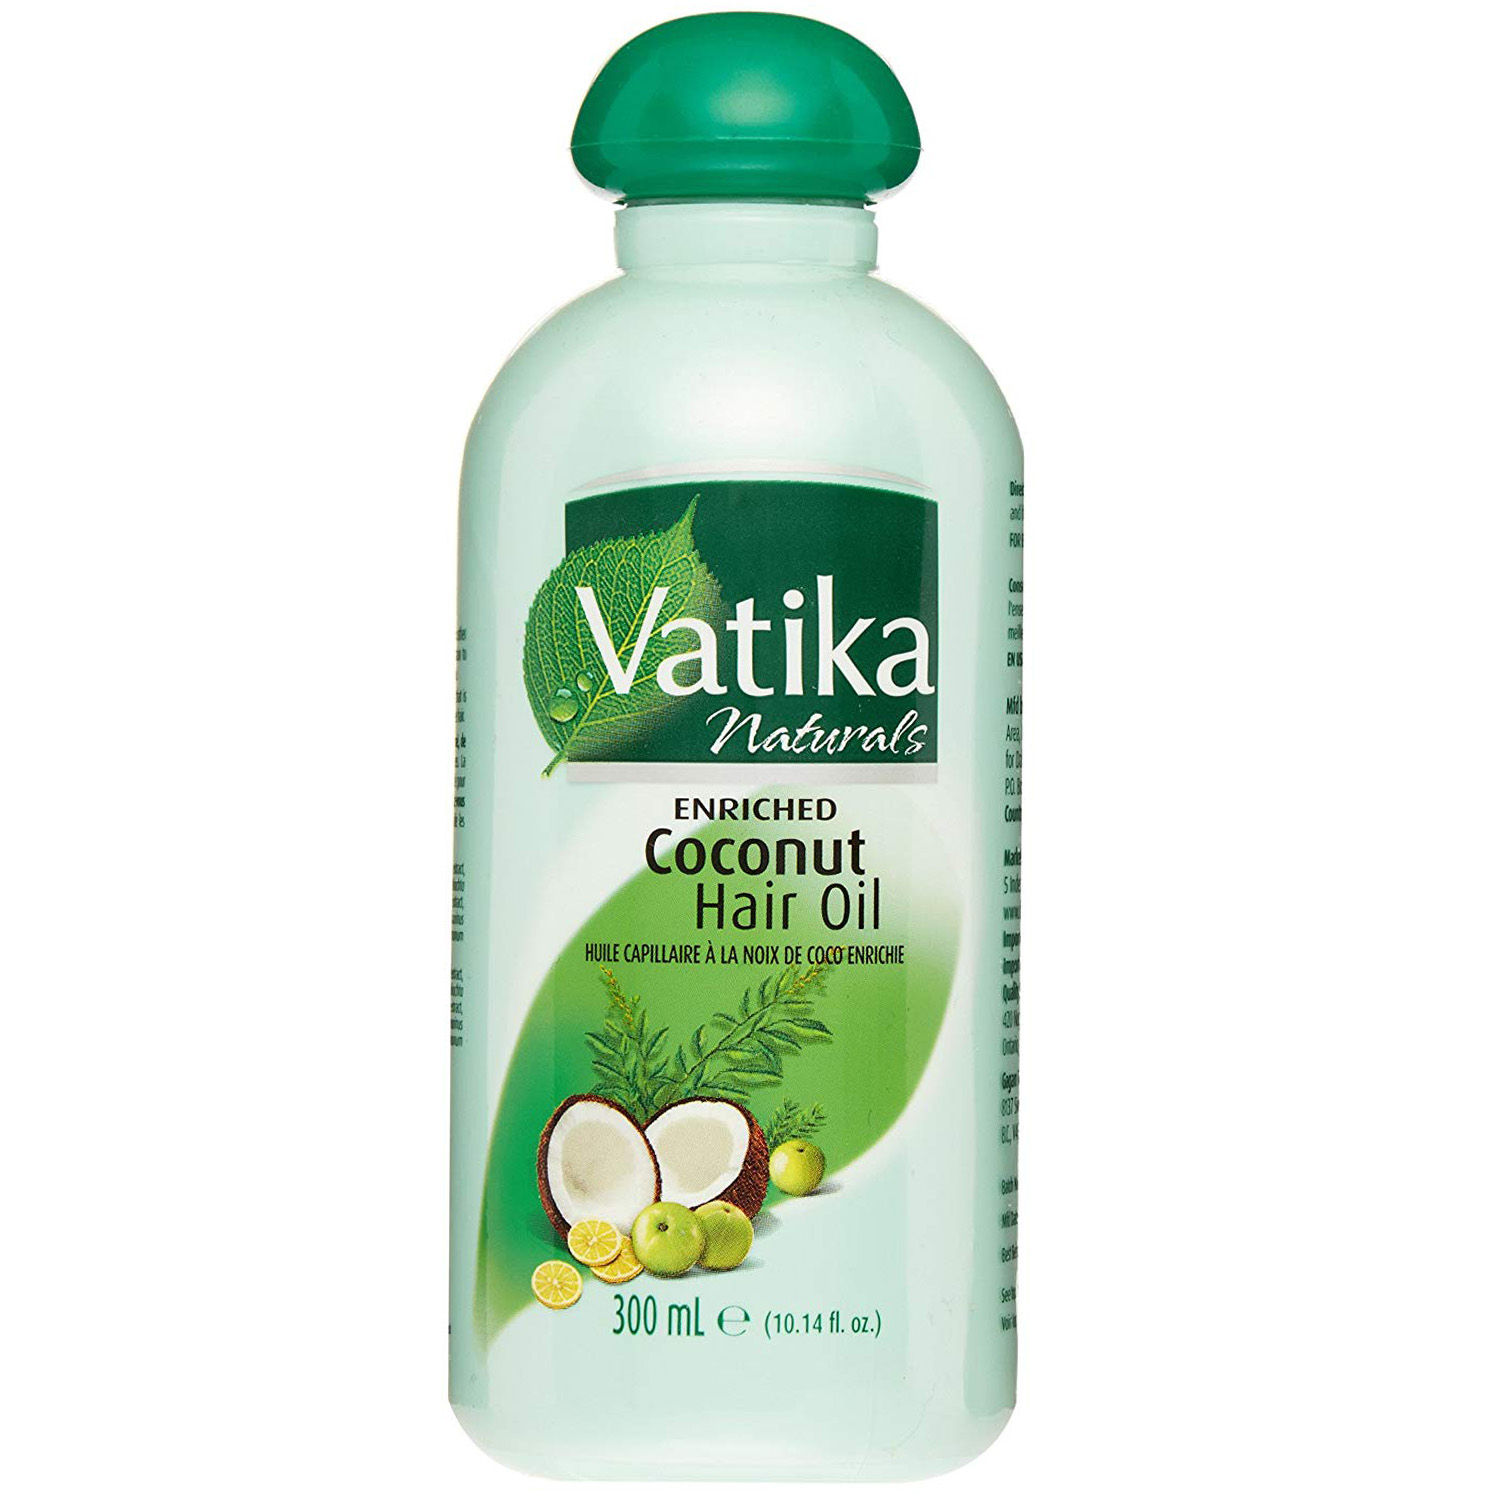 Vatika Enriched Coconut Hair Oil, 300 ml, Pack of 1 